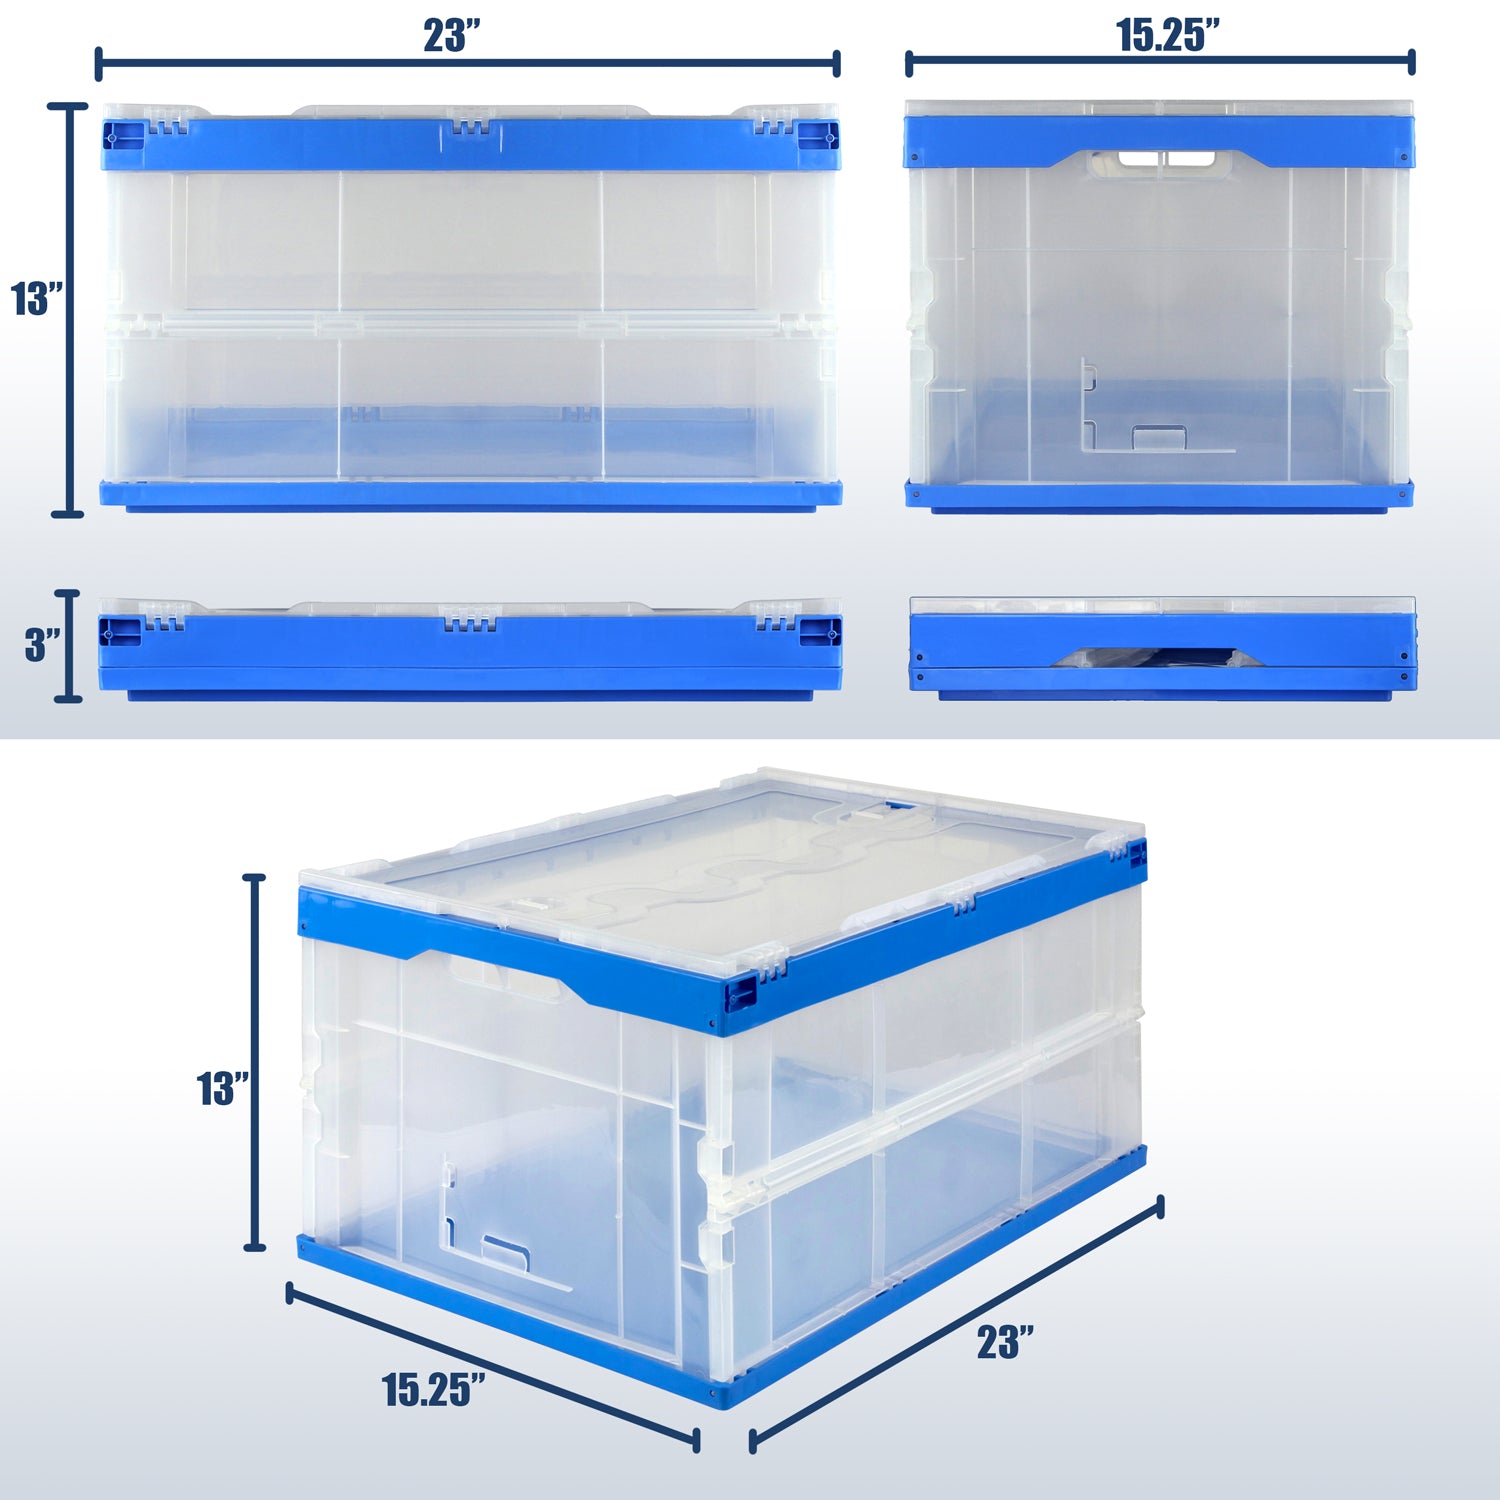 Folding Plastic Storage Crates